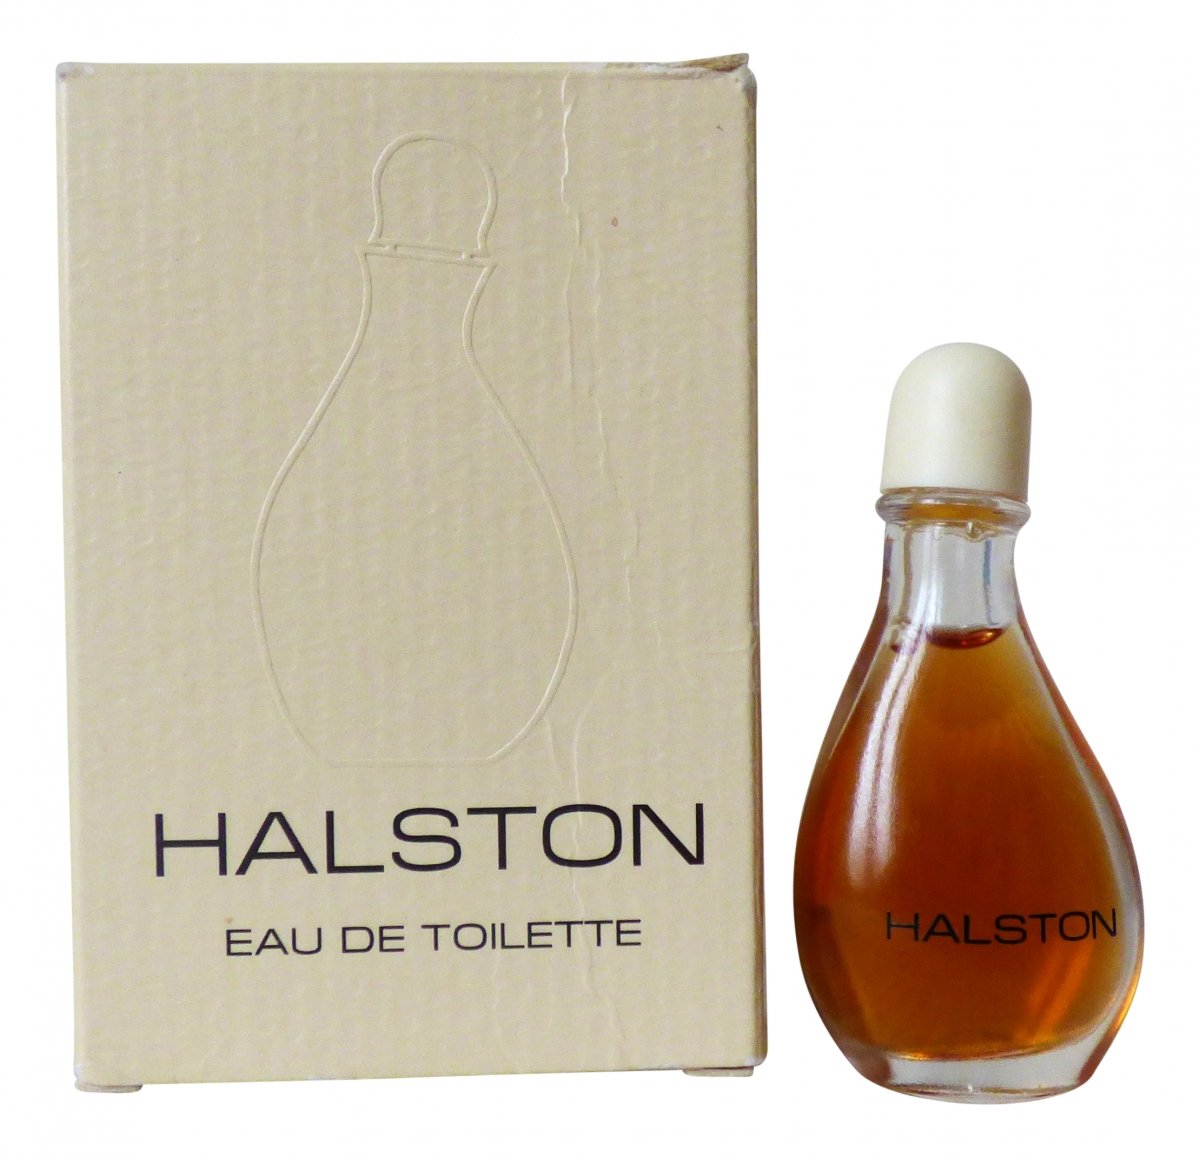 Halston perfume